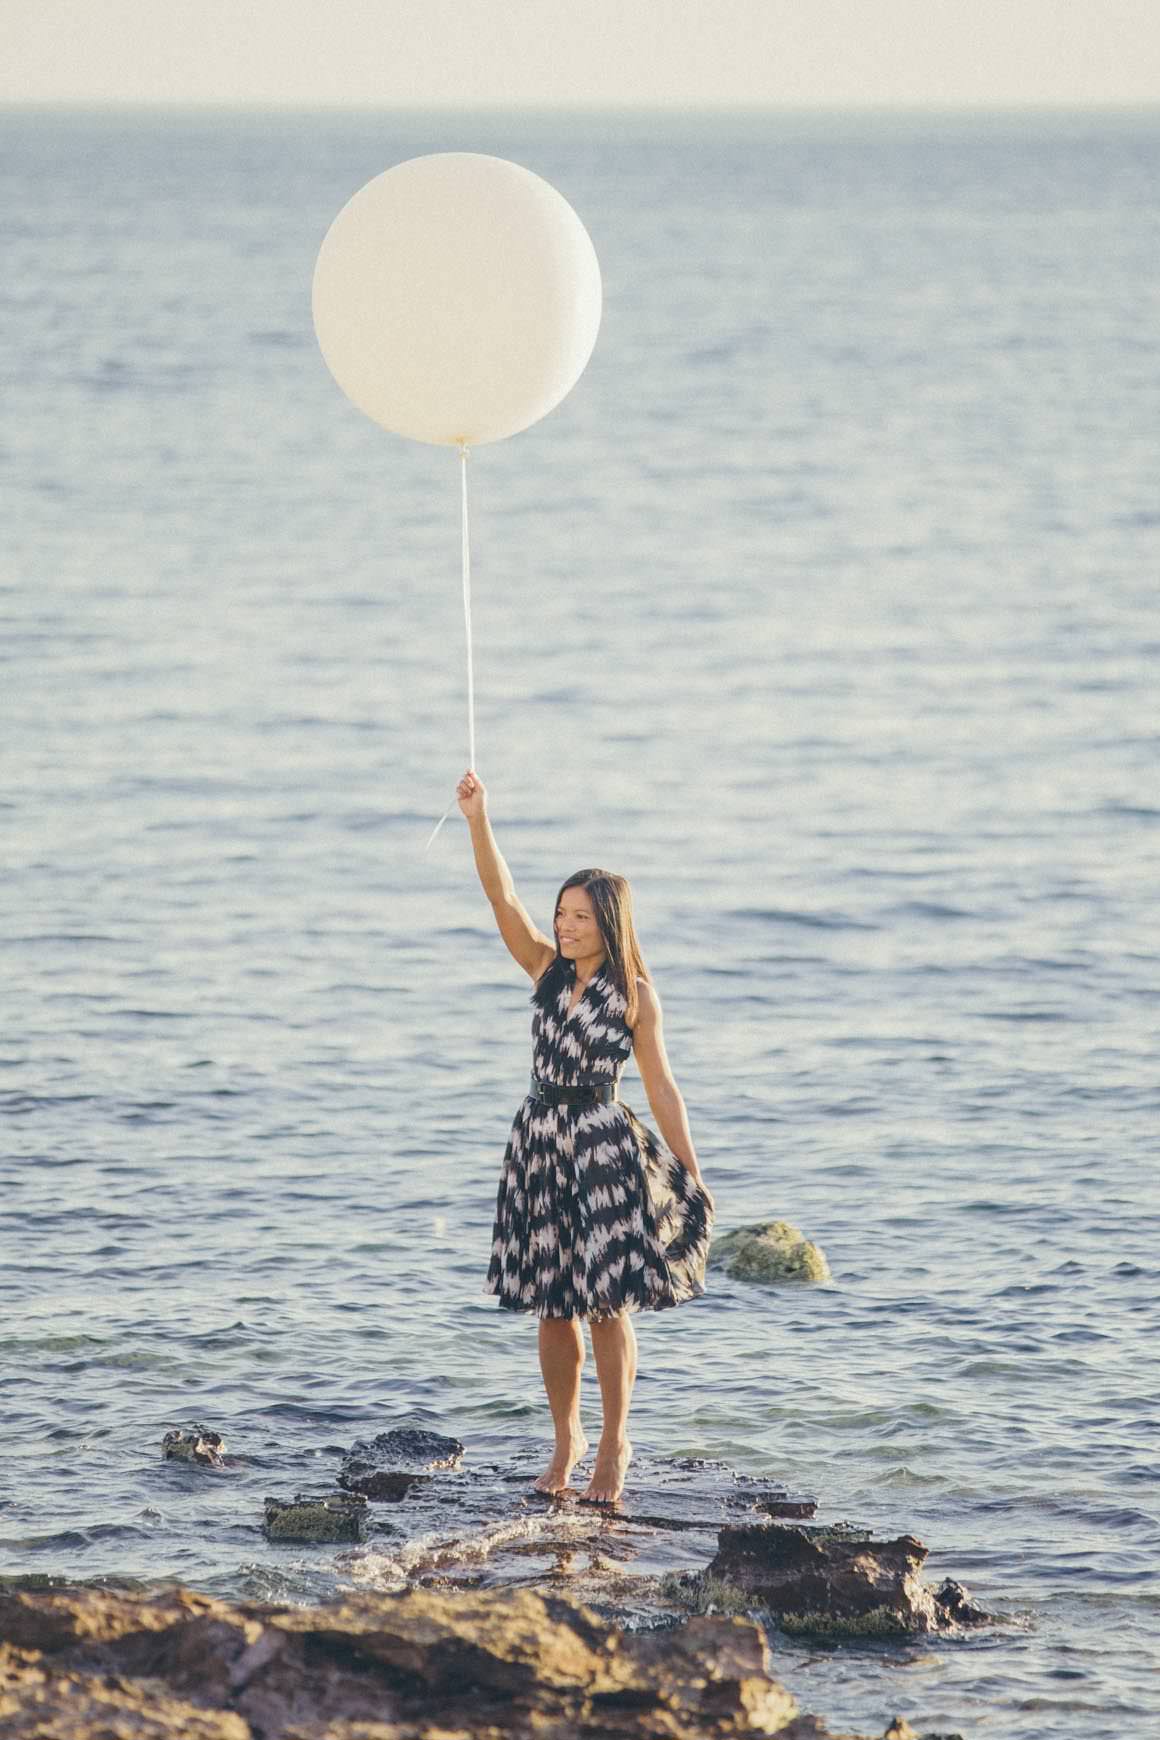 baloon at the beach - girl holding big balloon at the beach - photo prop